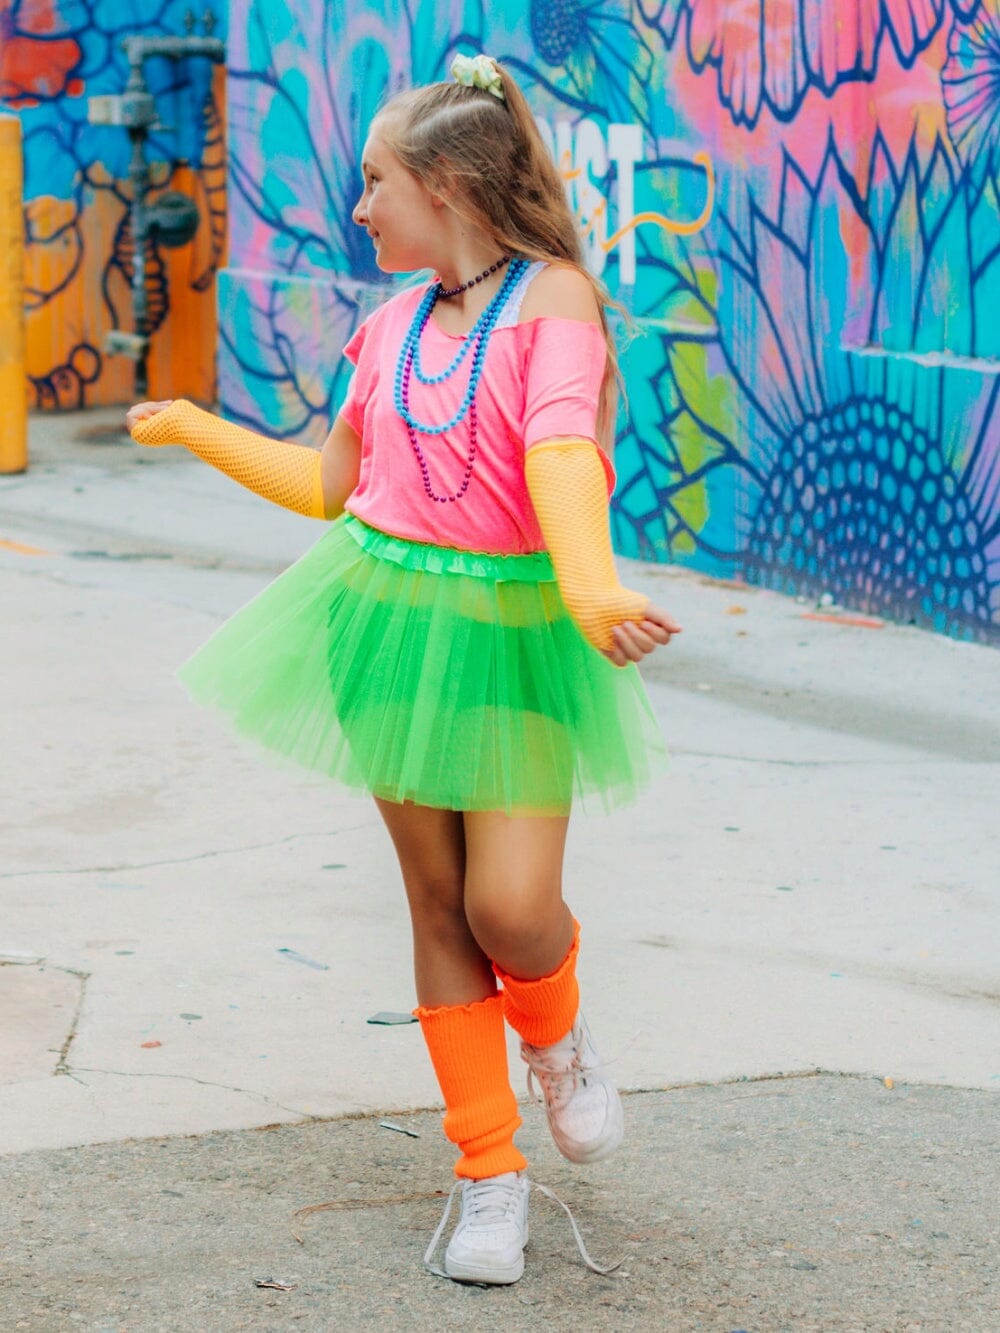 Halloweekend pt 3 👸🏽🥀 Top: @aliceandolivia Skirt and accessories: Amazon  | Instagram